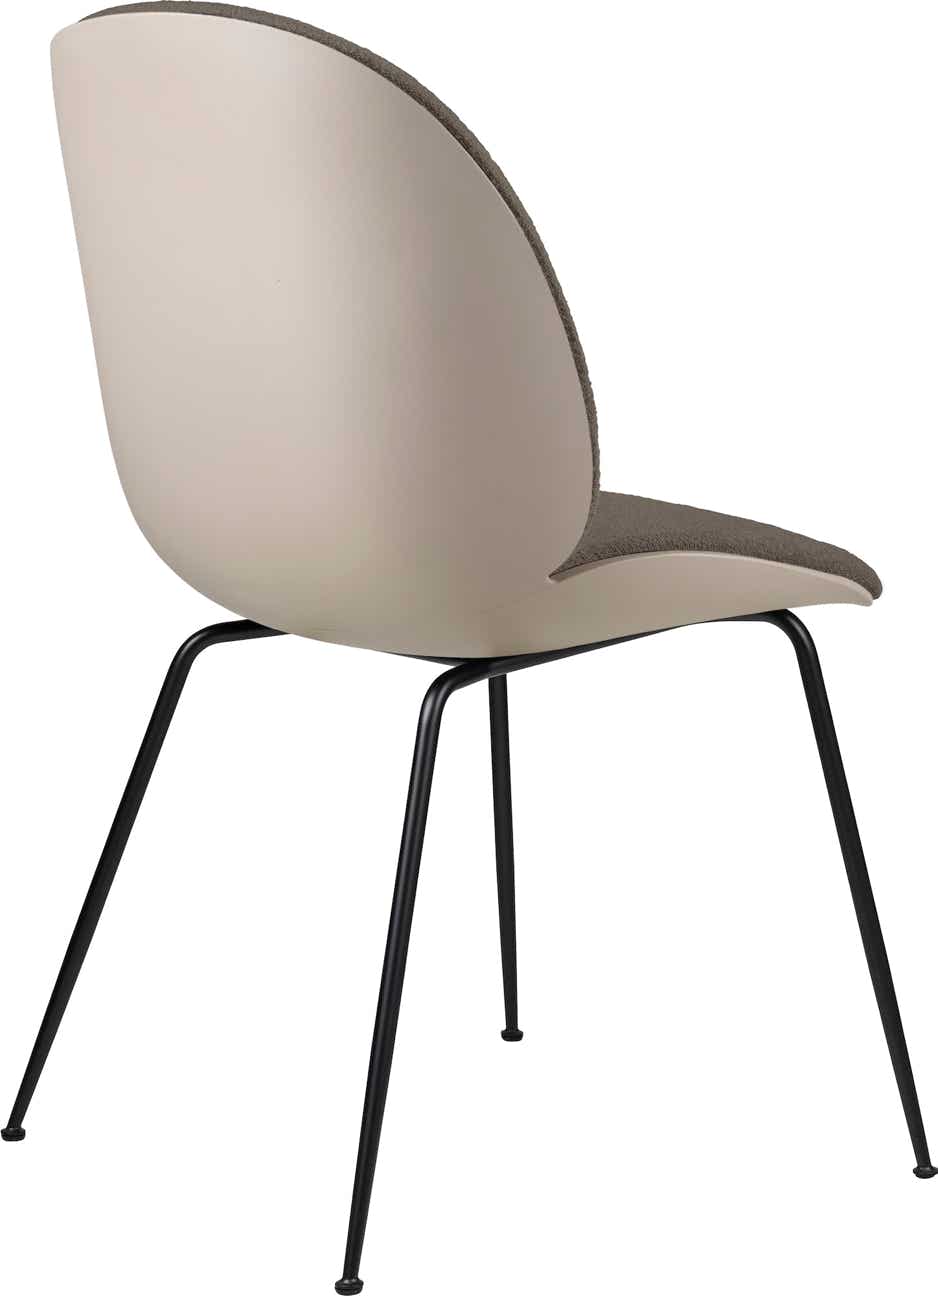 Beetle plastic chair, tube legs